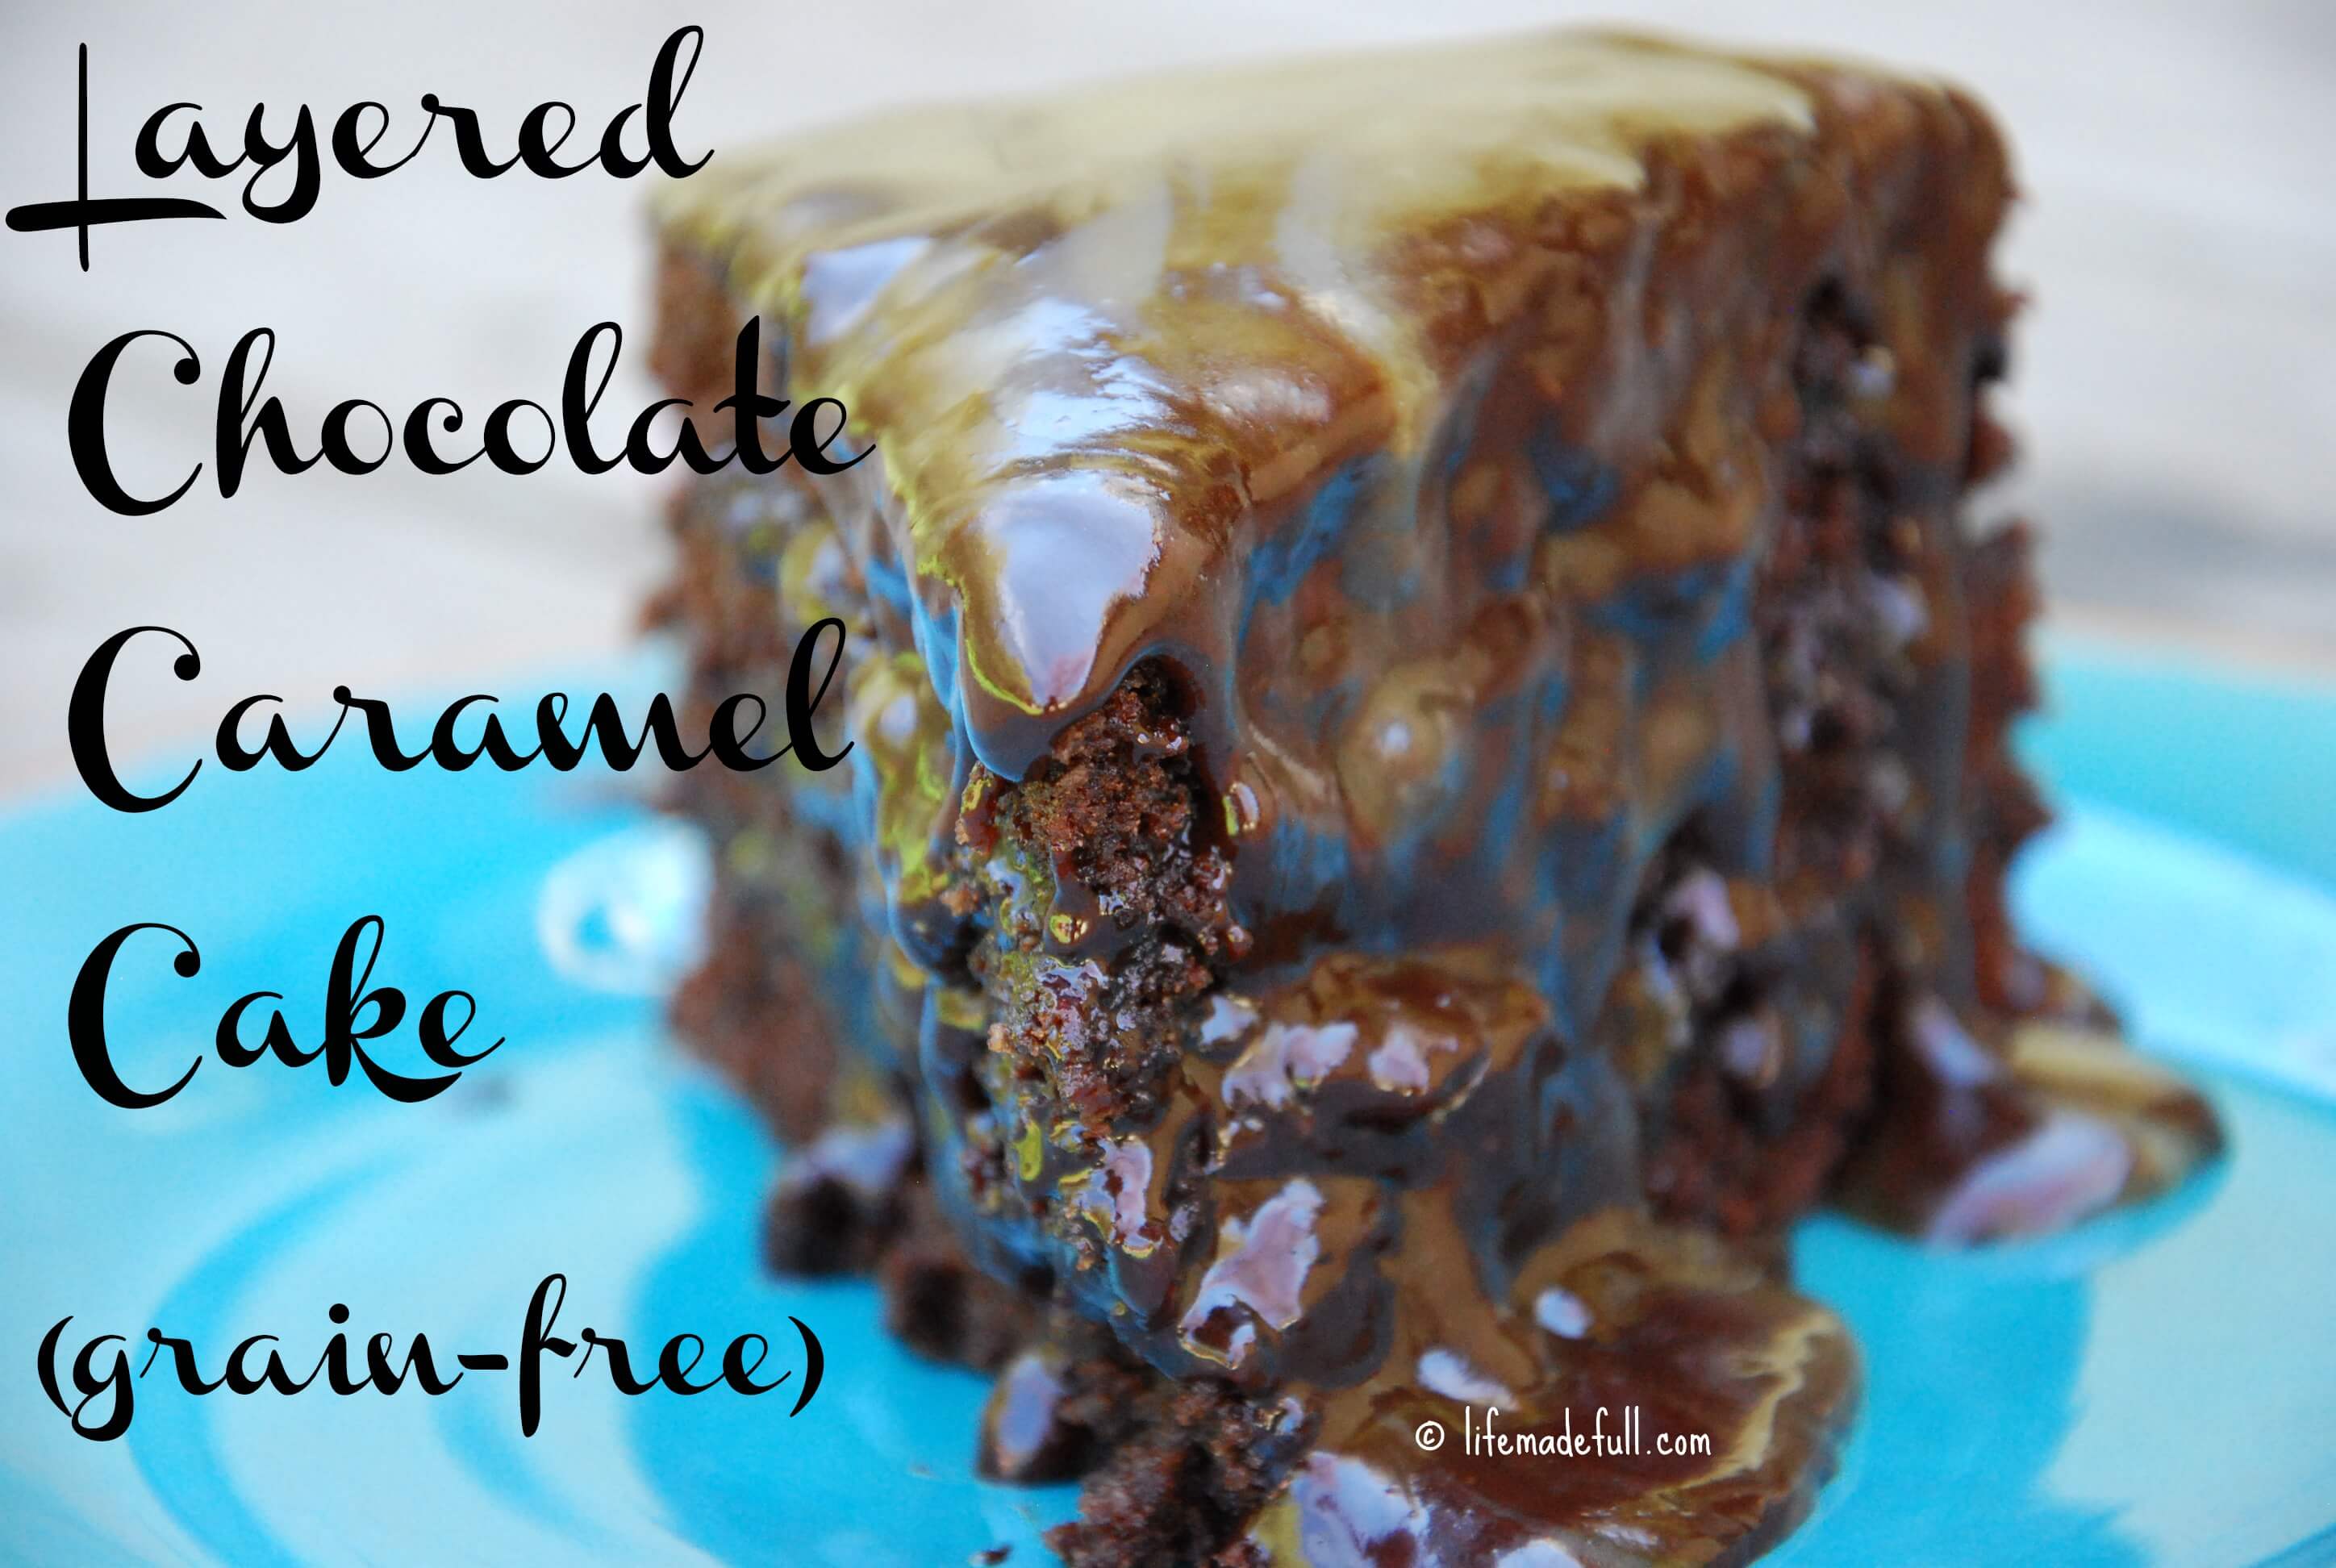 Layered Chocolate Caramel Cake (Grain Free)